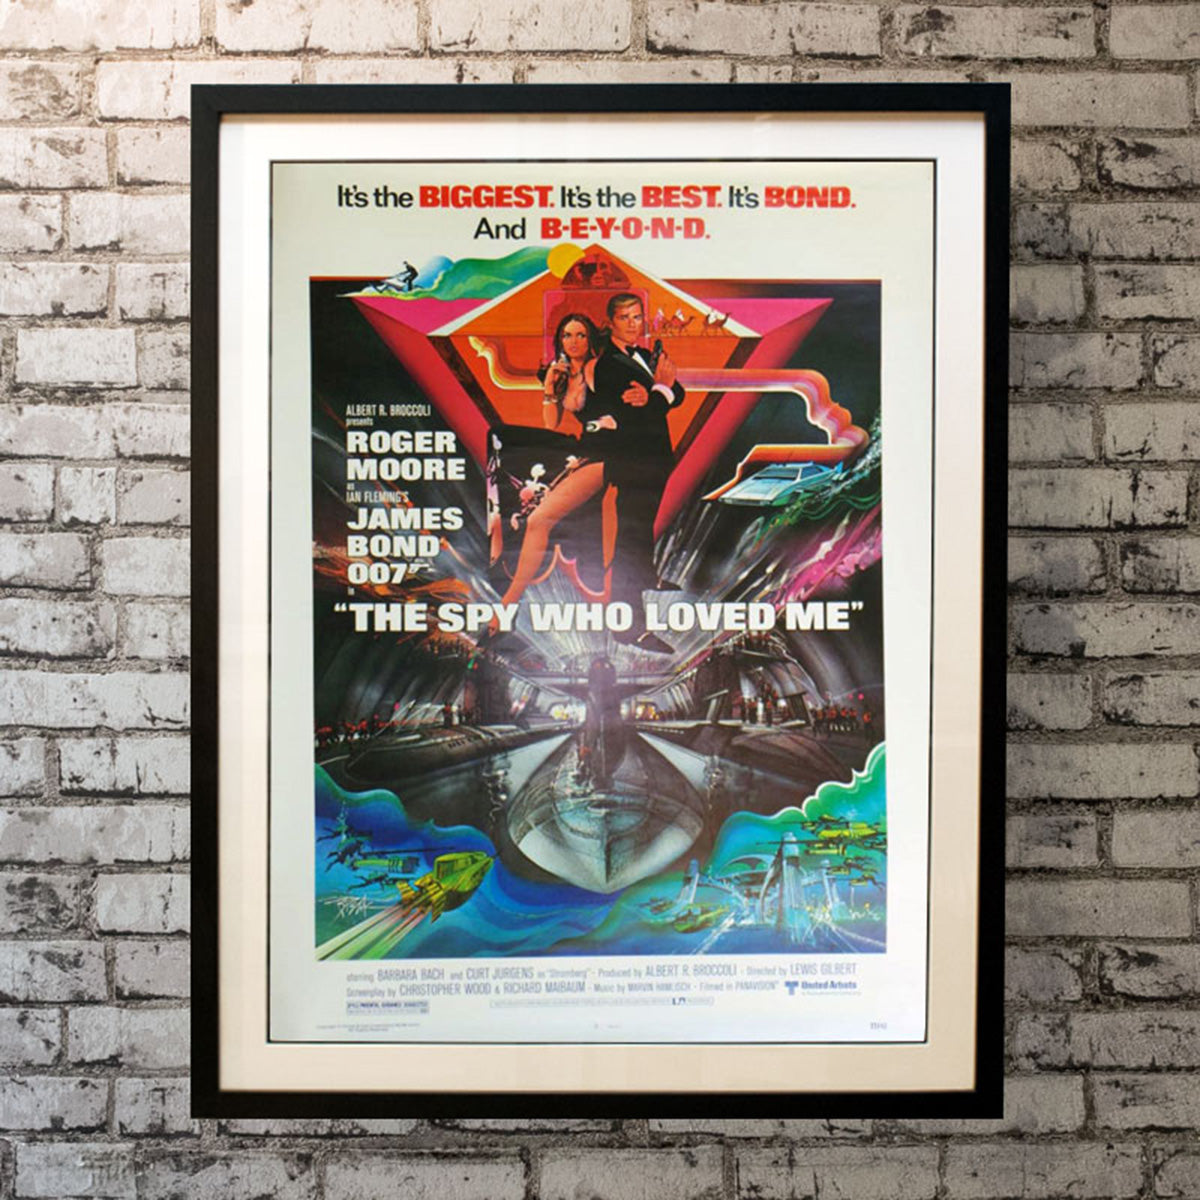 Original Movie Poster of Spy Who Loved Me, The (1977)